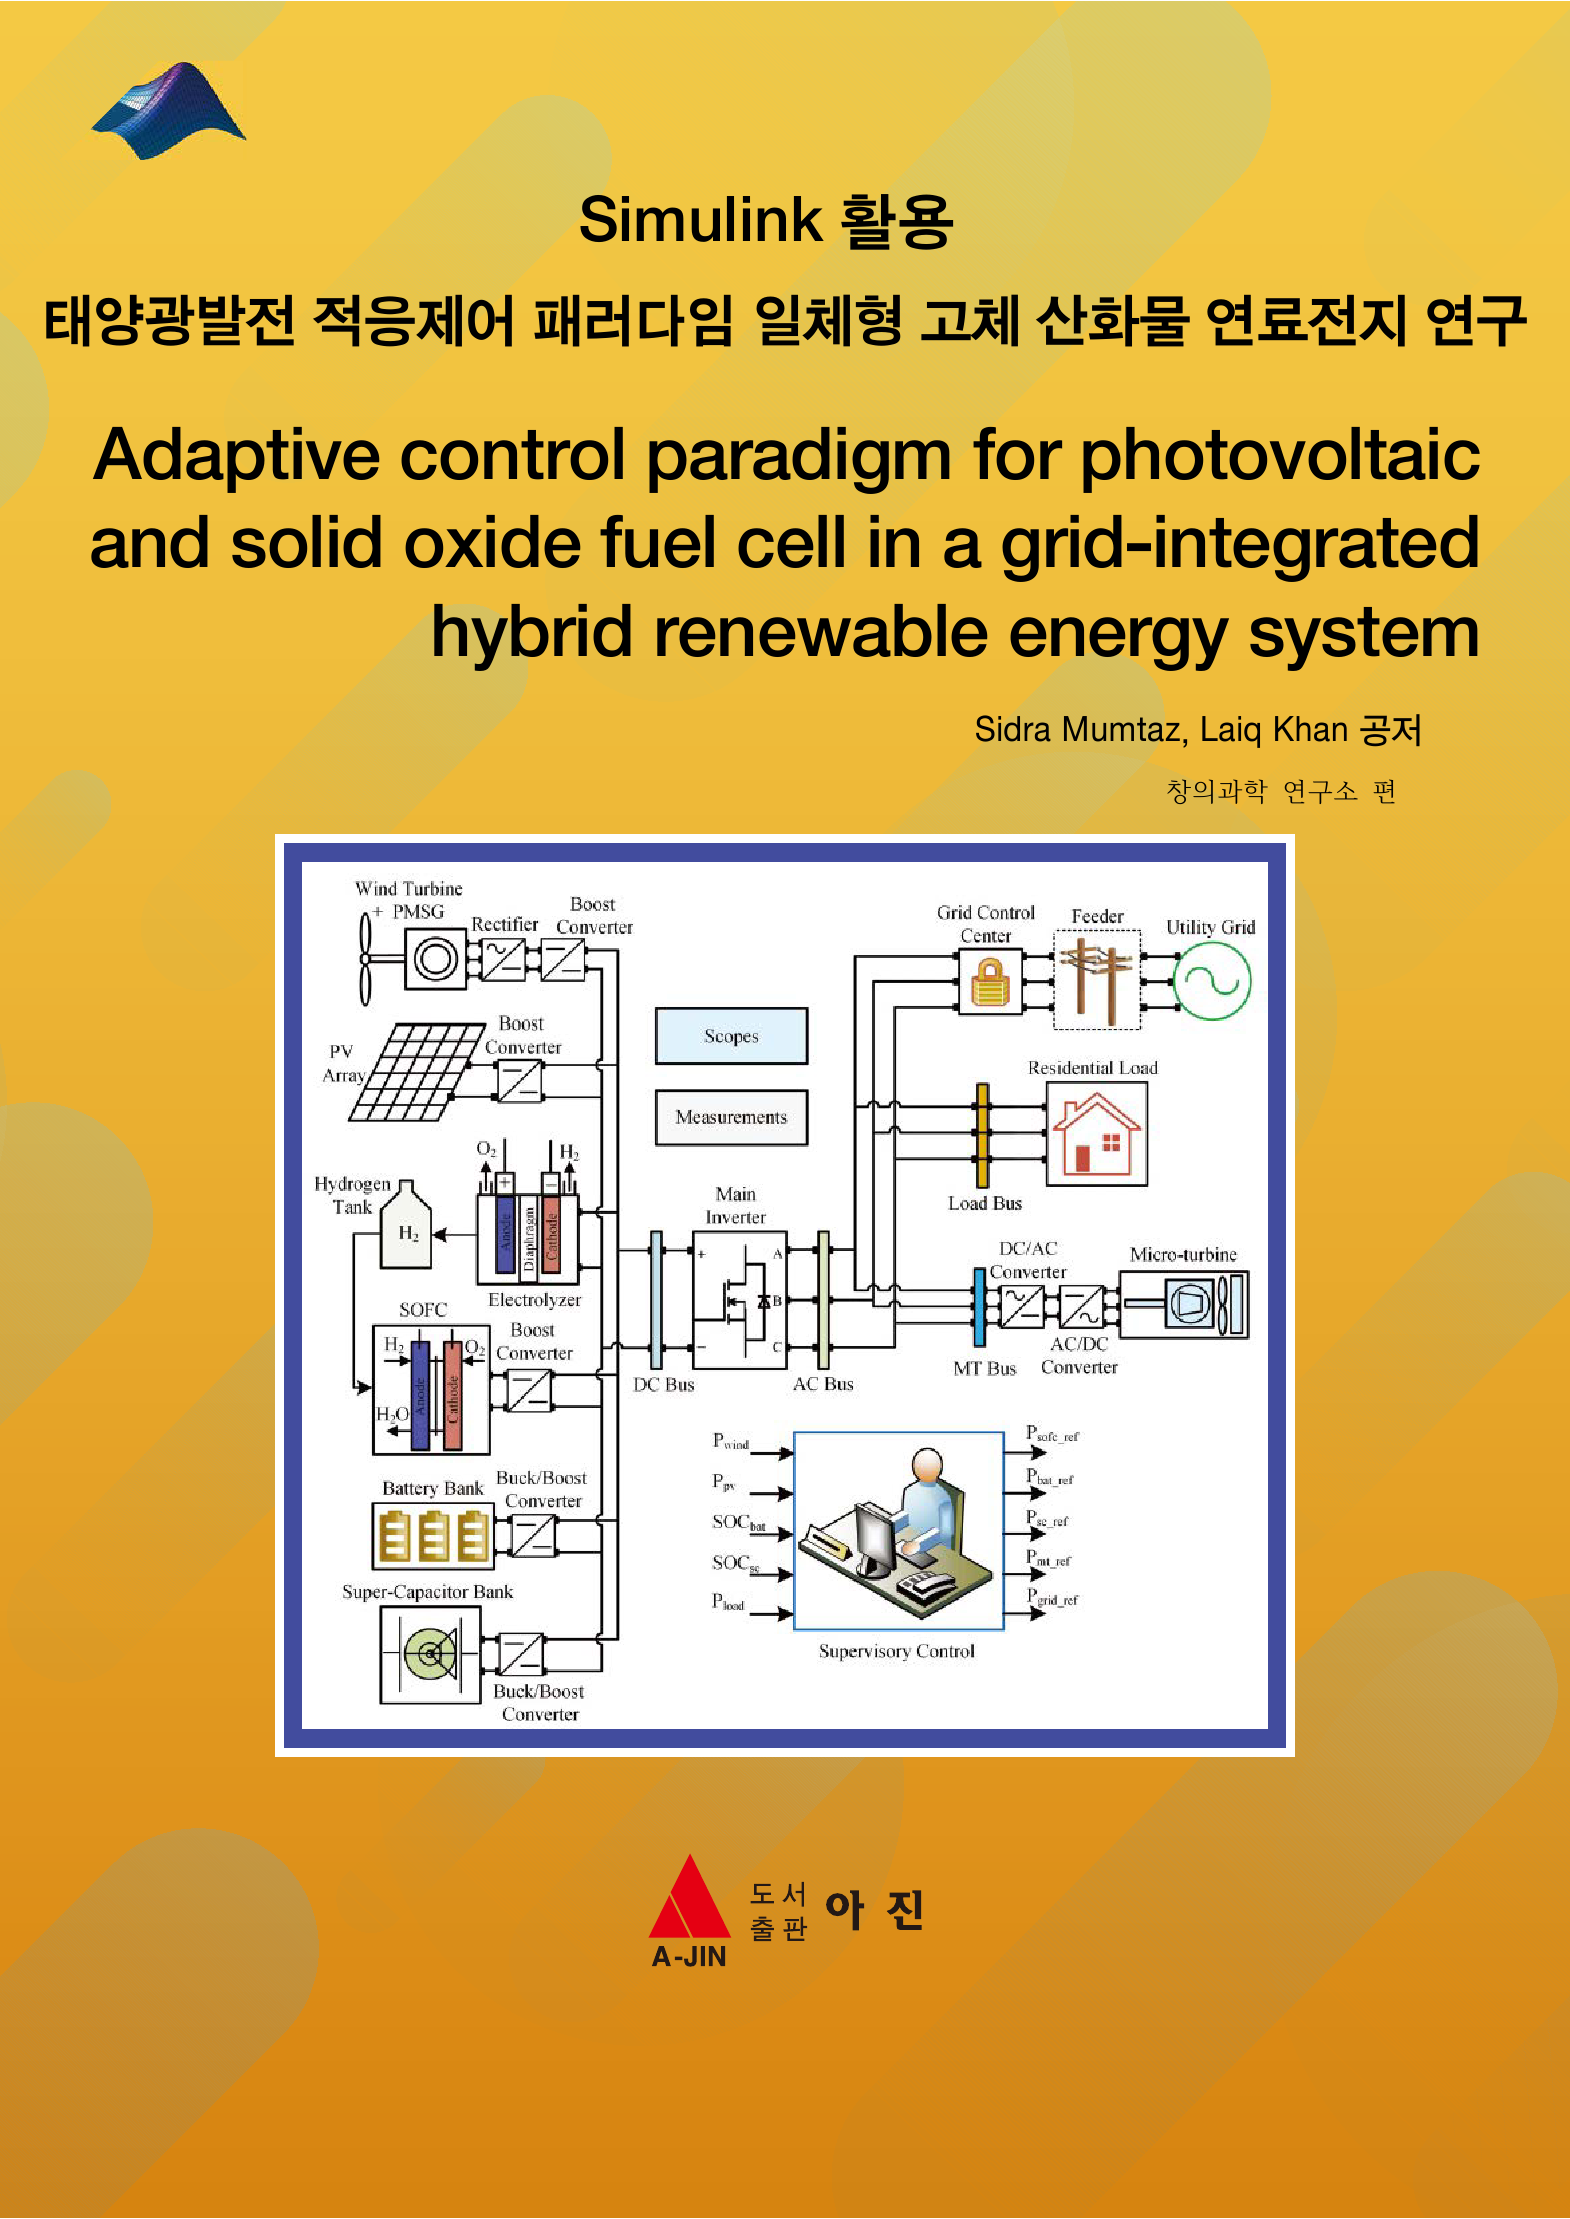 Simulink 활용 태양광발전 적응제어 패러다임 일체형 고체 산화물 연료전지 연구(Adaptive control paradigm for photovoltaic and solid oxide fuel cell in a grid-integrated hybrid renewable energy system)